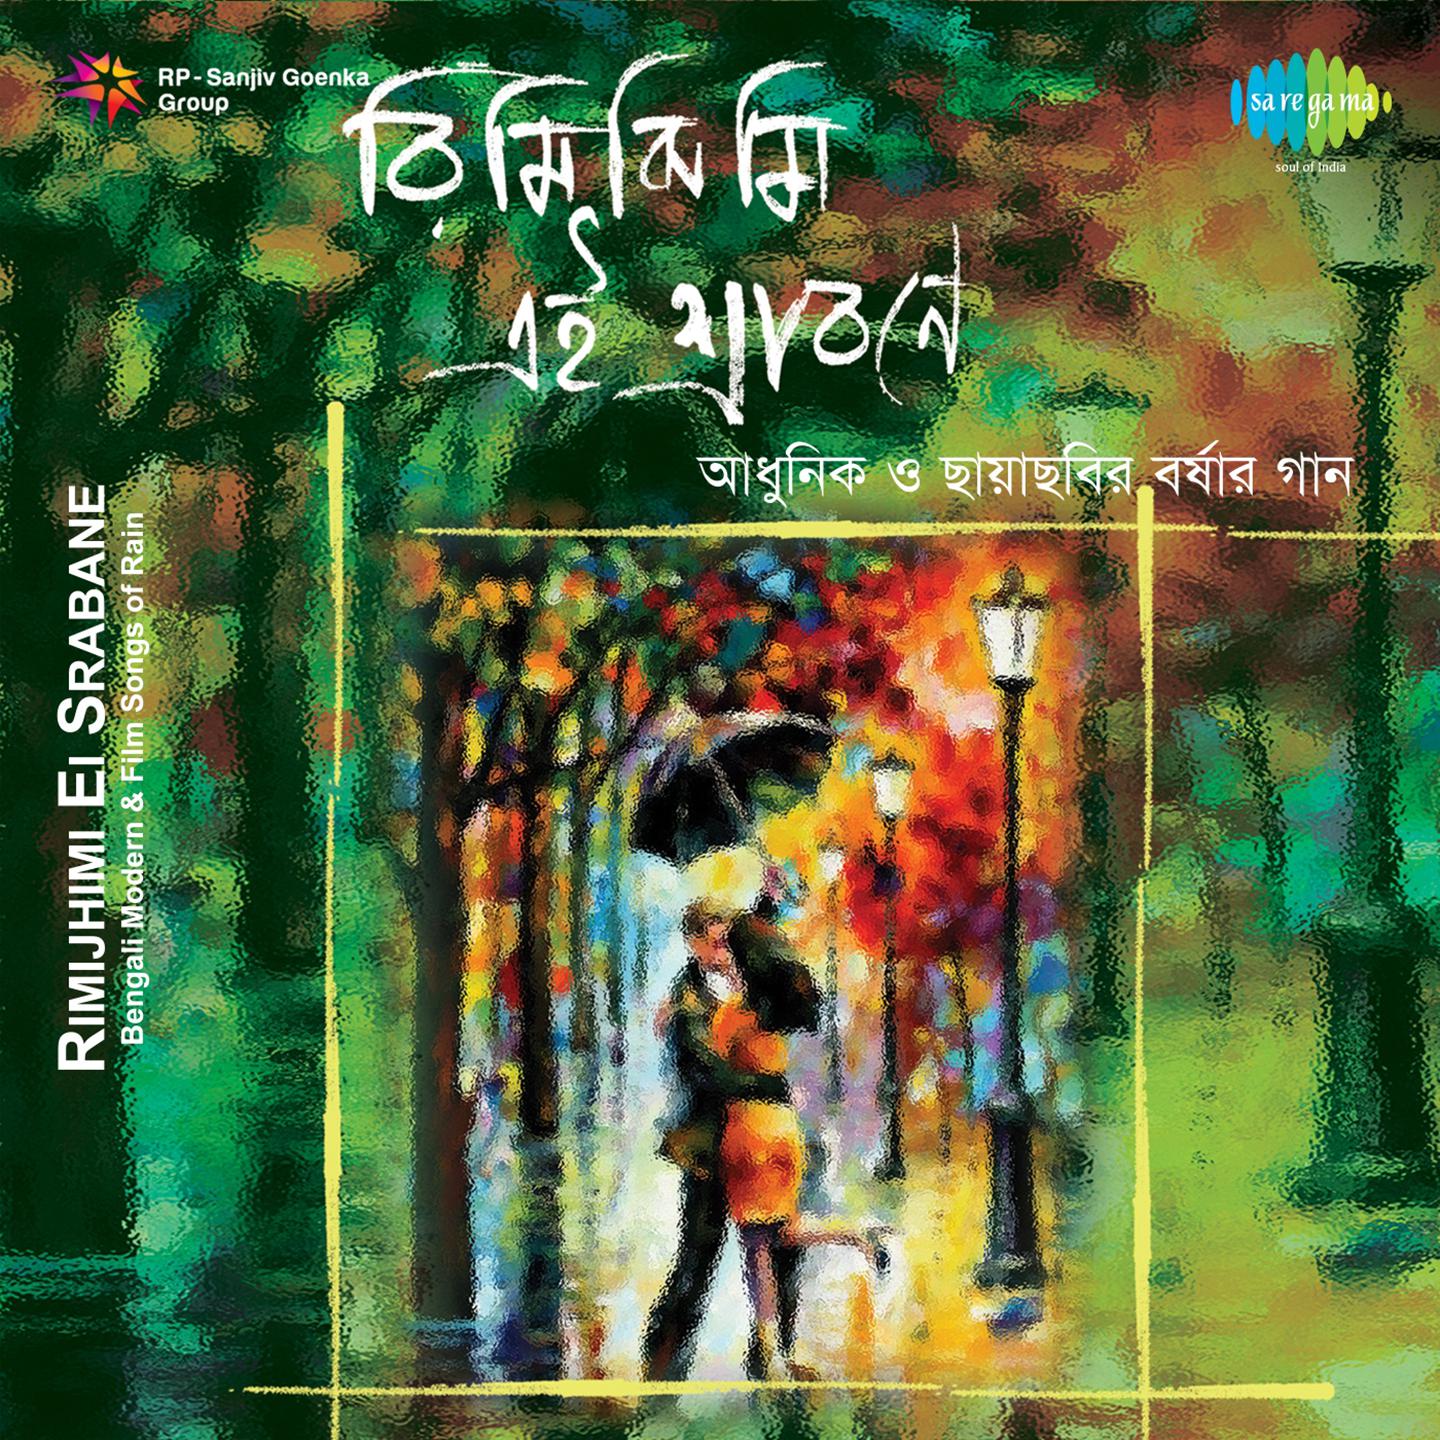 Rimjhimi Ei Srabane Bengali Modern And Film Songs On Rain